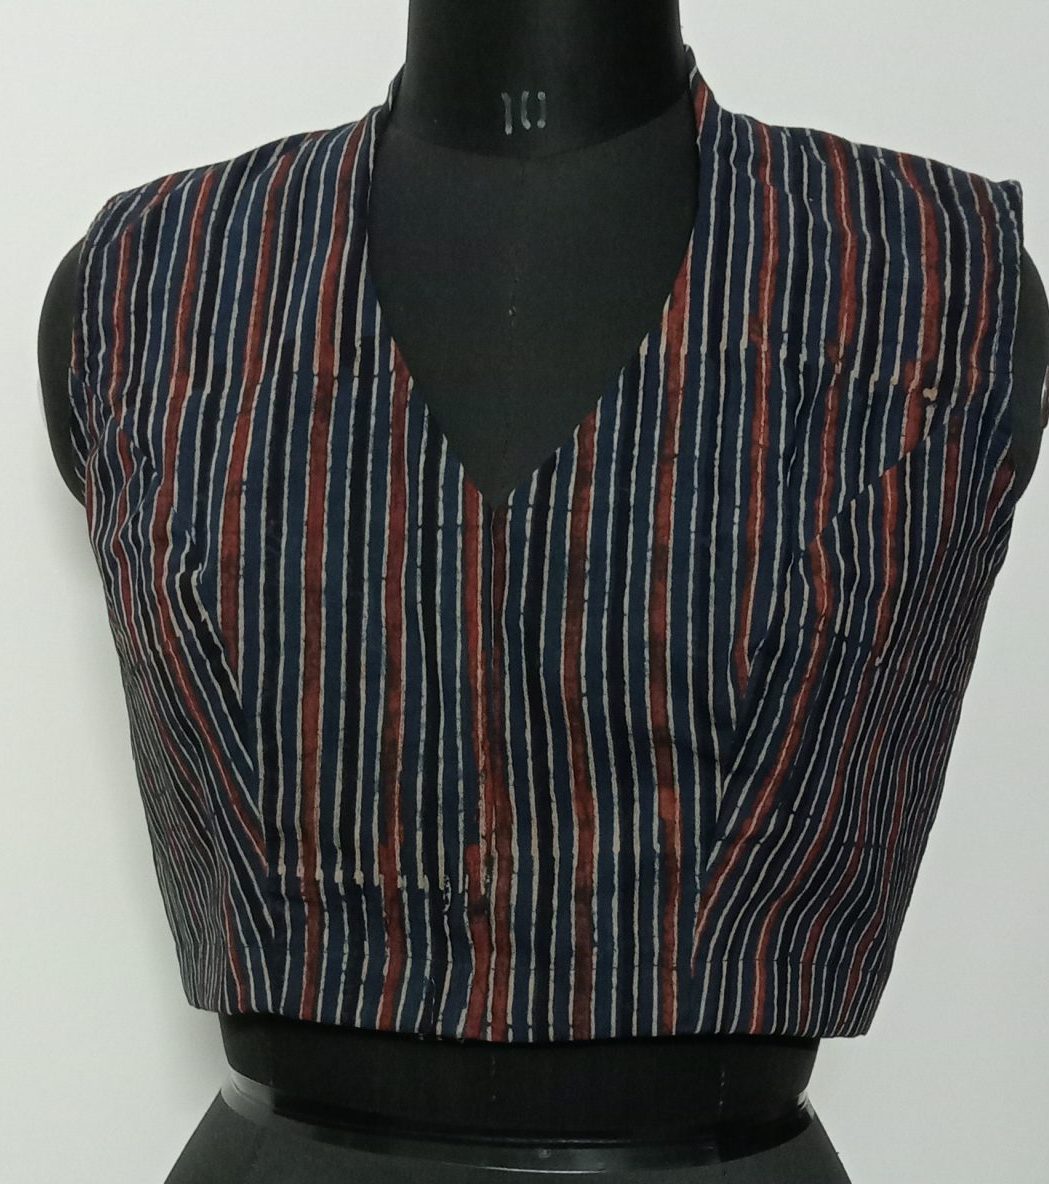 ajrakh stripes sleeveless blouse